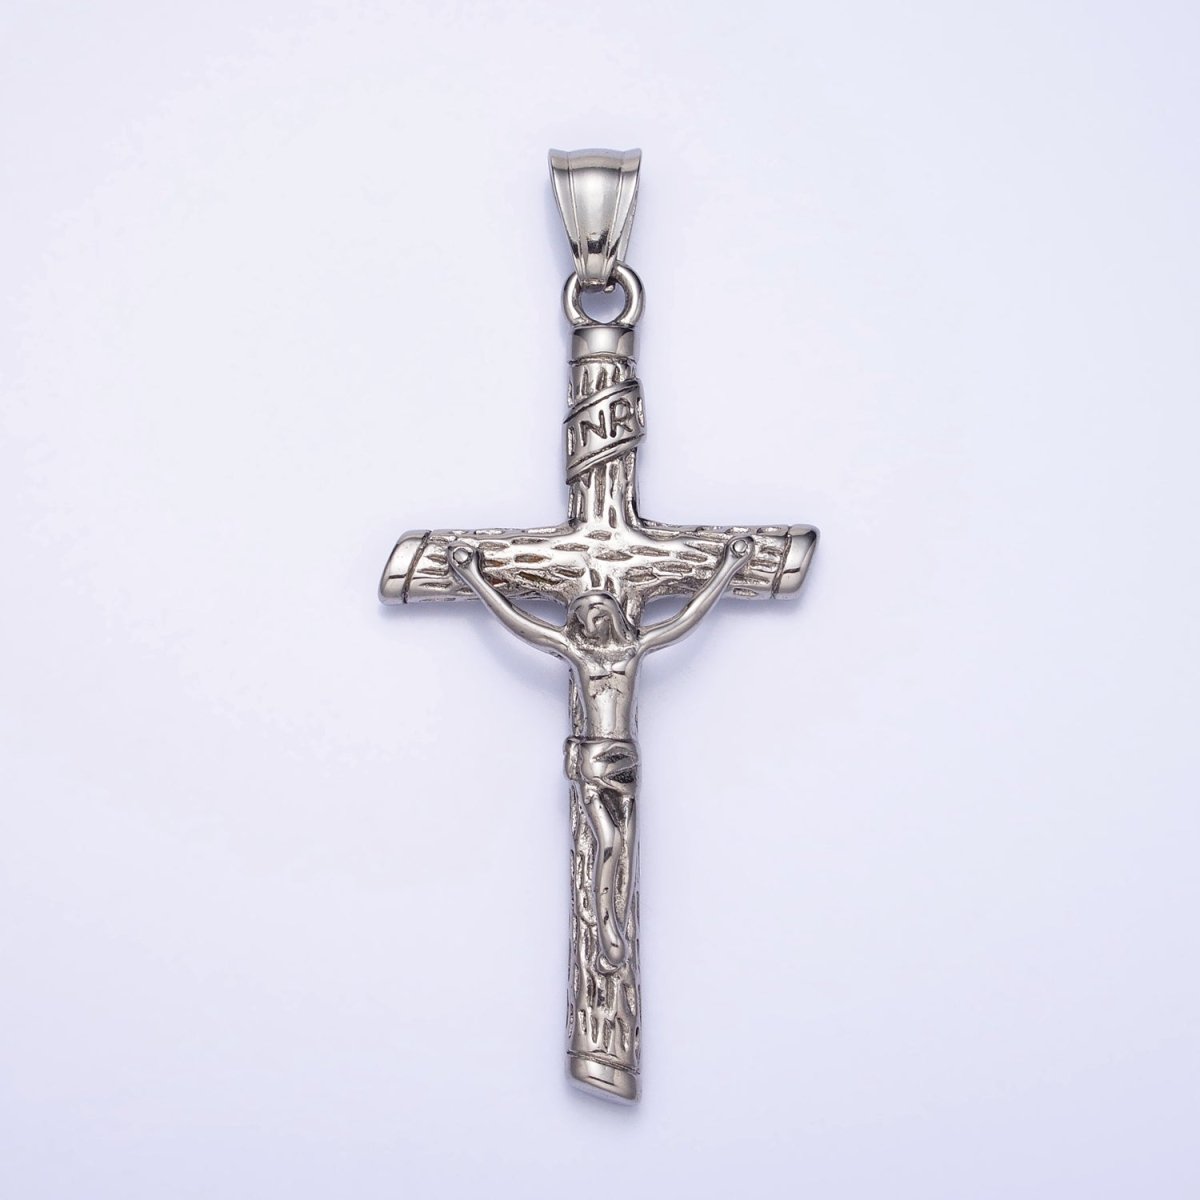 Stainless Steel INRI Crucifix Jesus Wood-Textured Cross 41.5mm Pendant in Gold, Silver & Black P1153 P1154 - DLUXCA